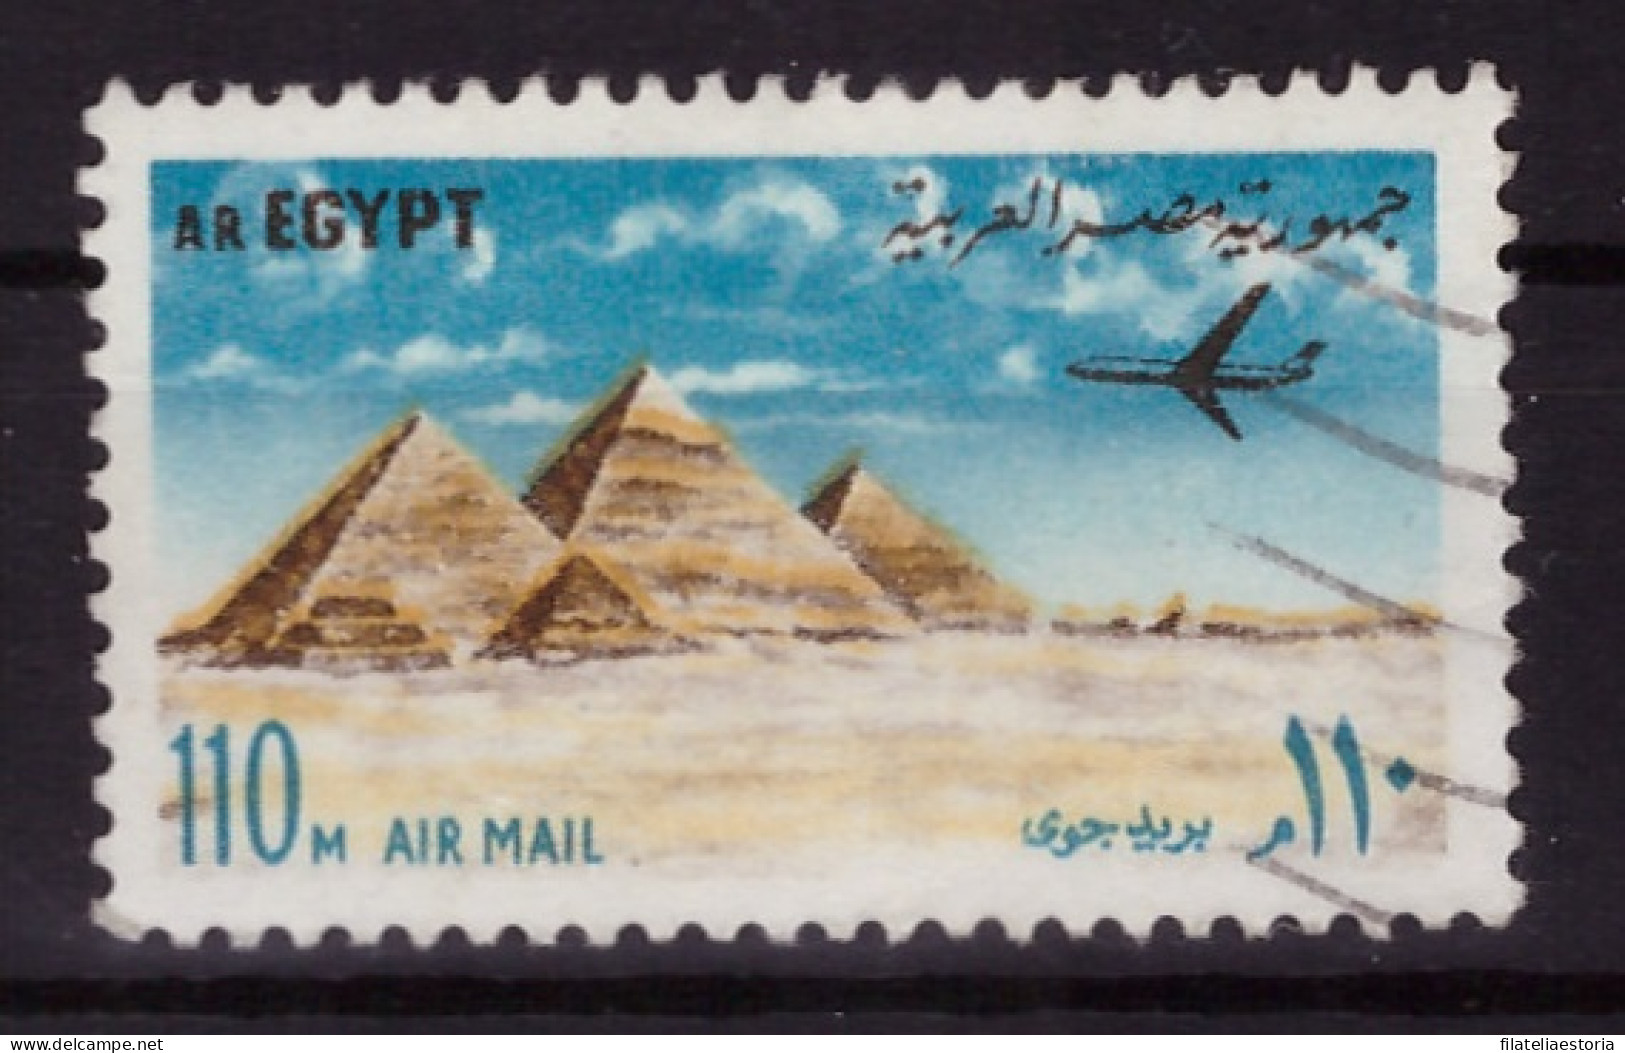 Egypte 1972 - Oblitéré - Monuments - Avions - Michel Nr. 1115 (egy350) - Usati